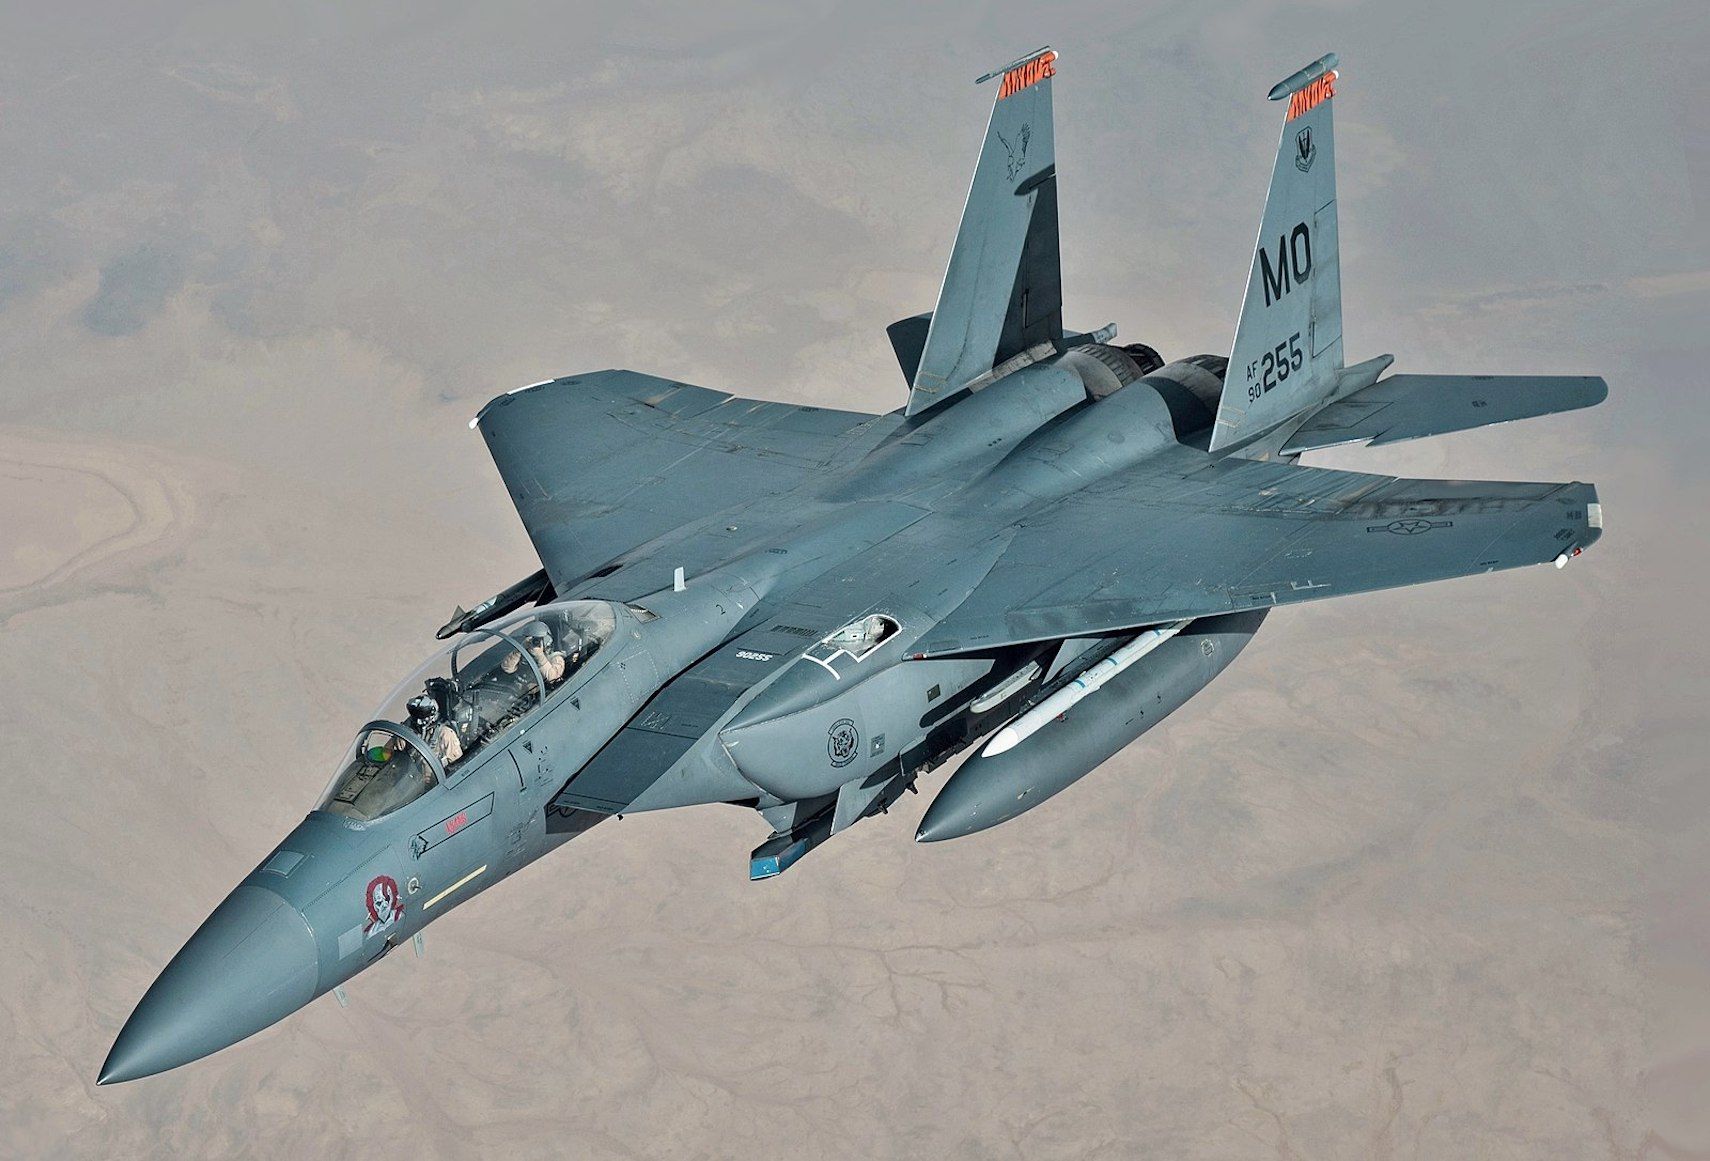 F-15E Strike Eagle Fighter Jet